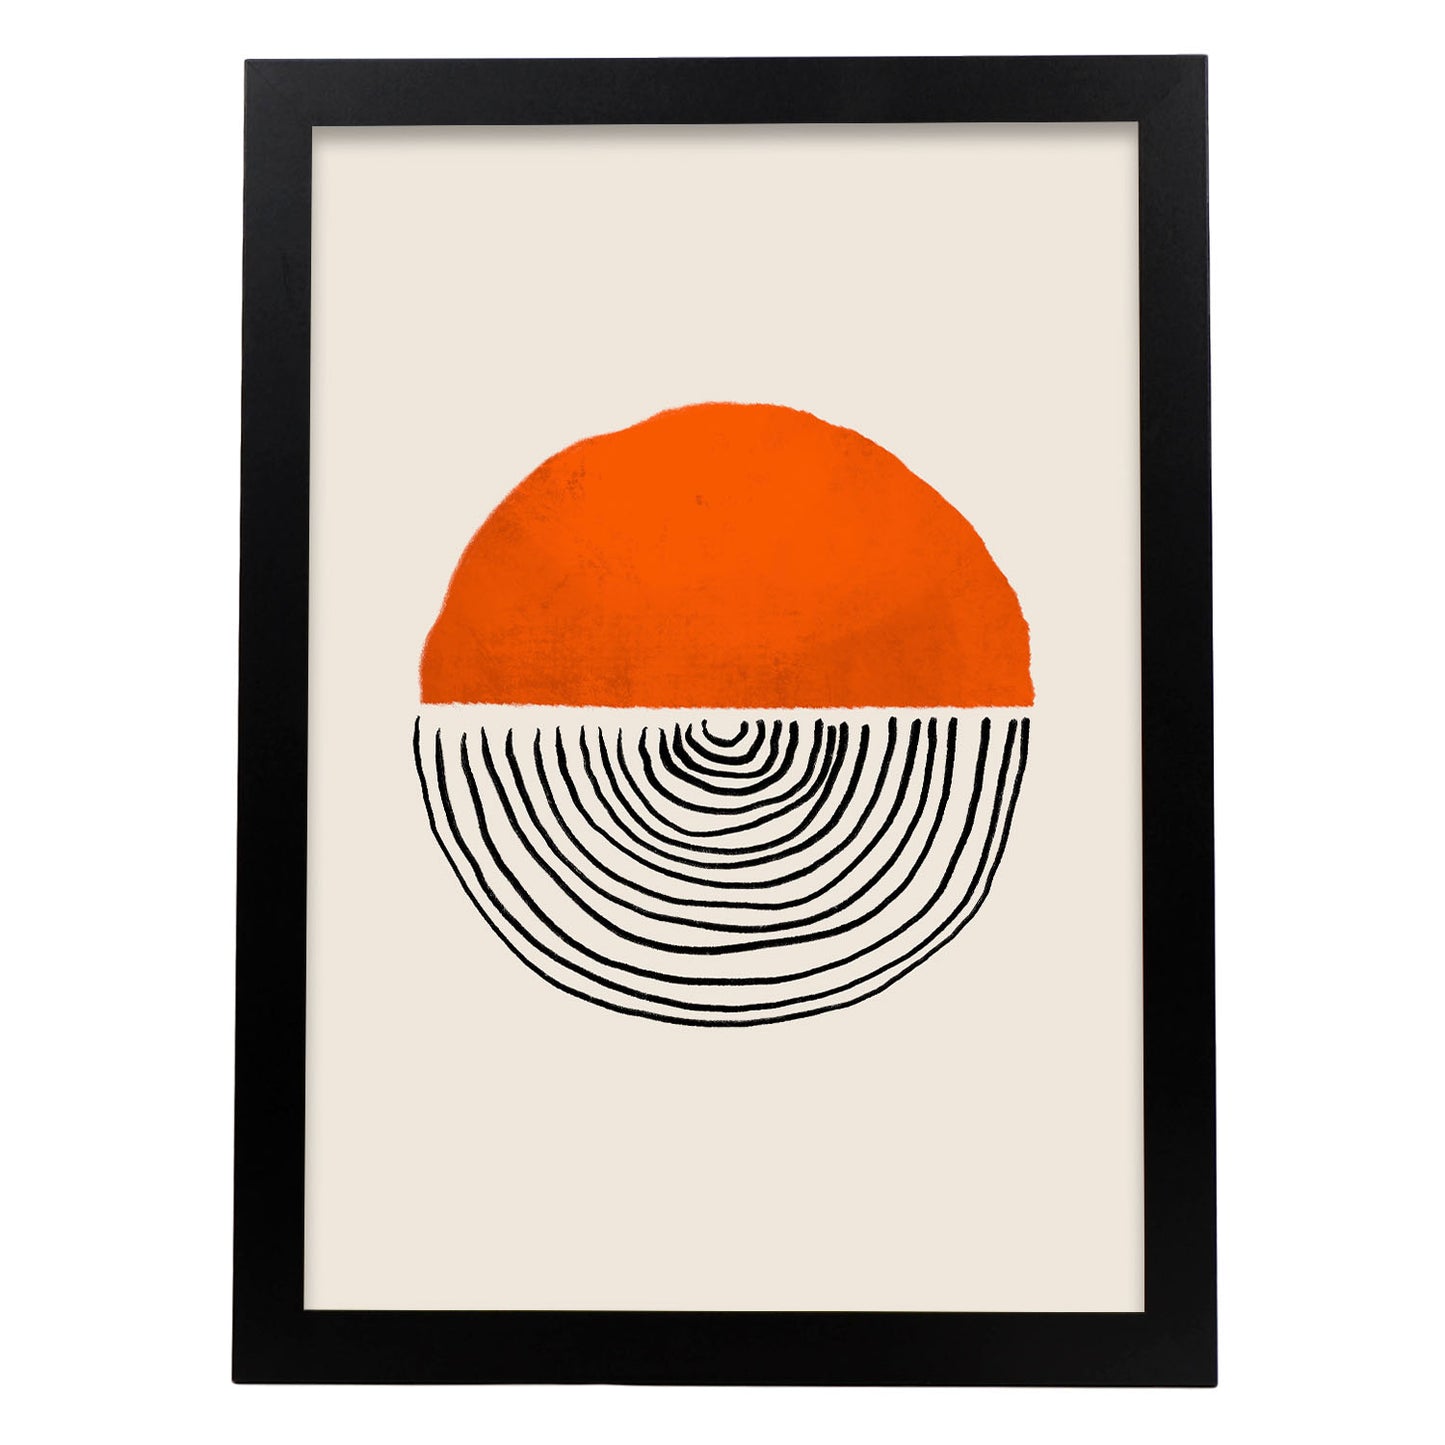 Lamina Nacnic Diseño de Esfera Naranja